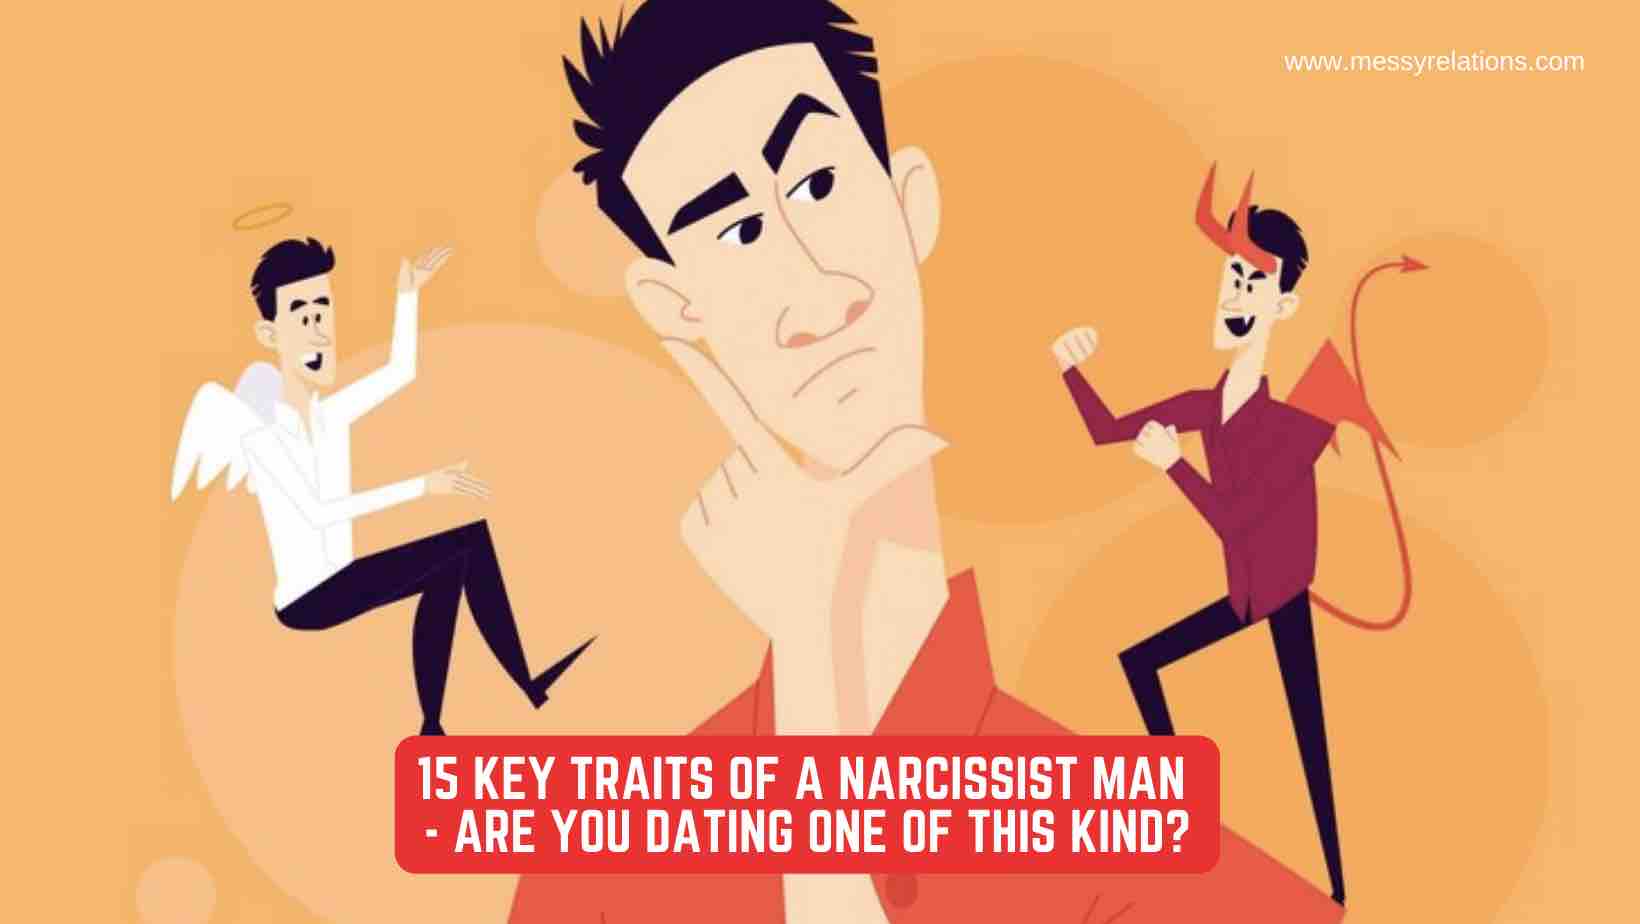 Traits of a Narcissist Man